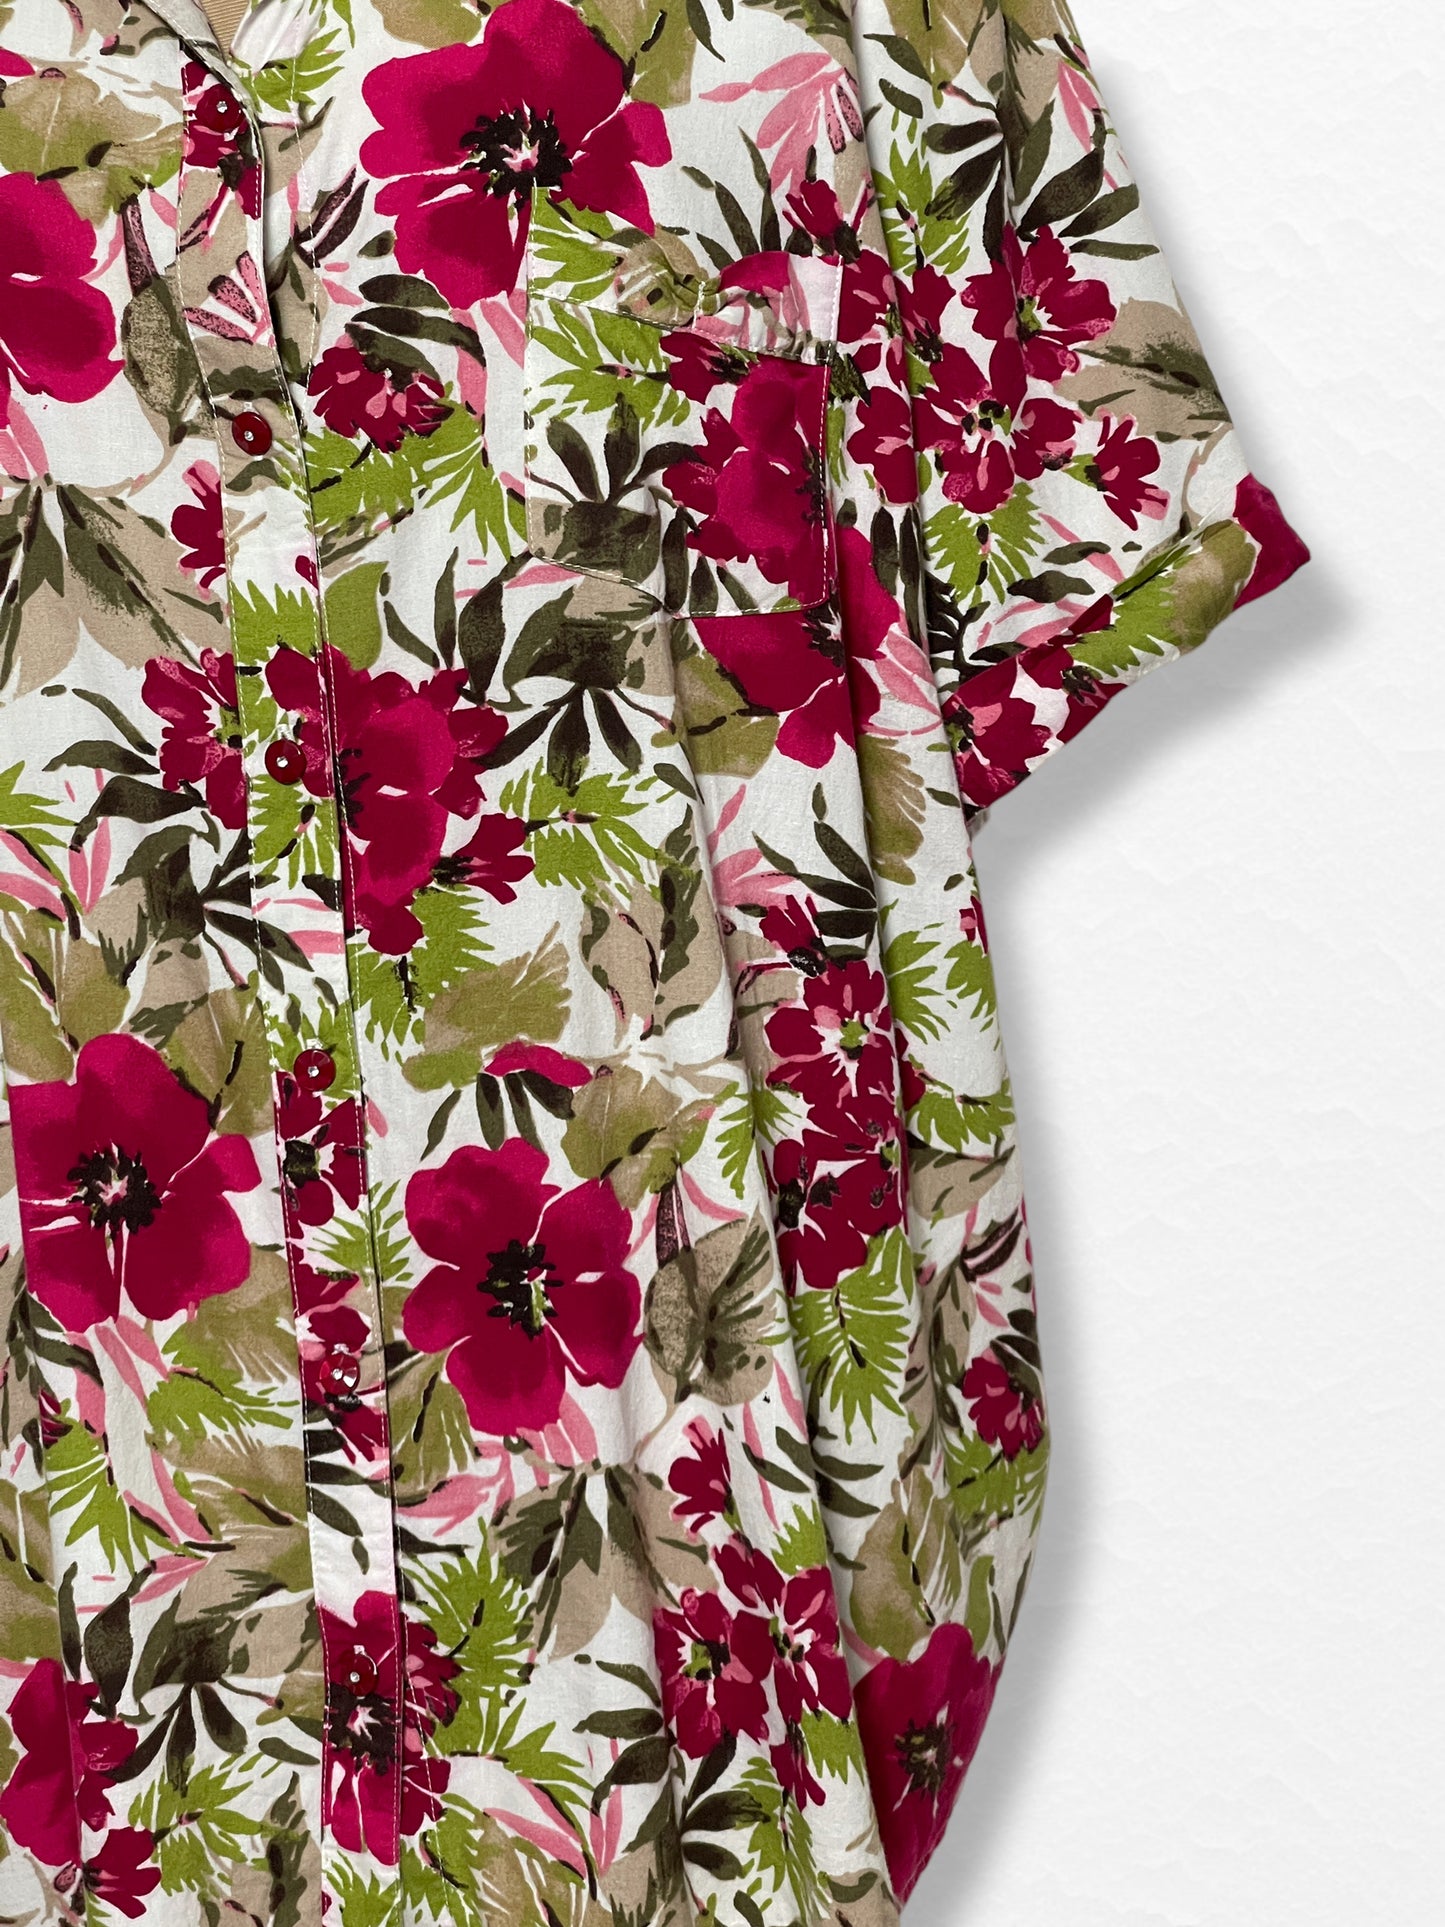 Women's Hawaii Shirt 3965